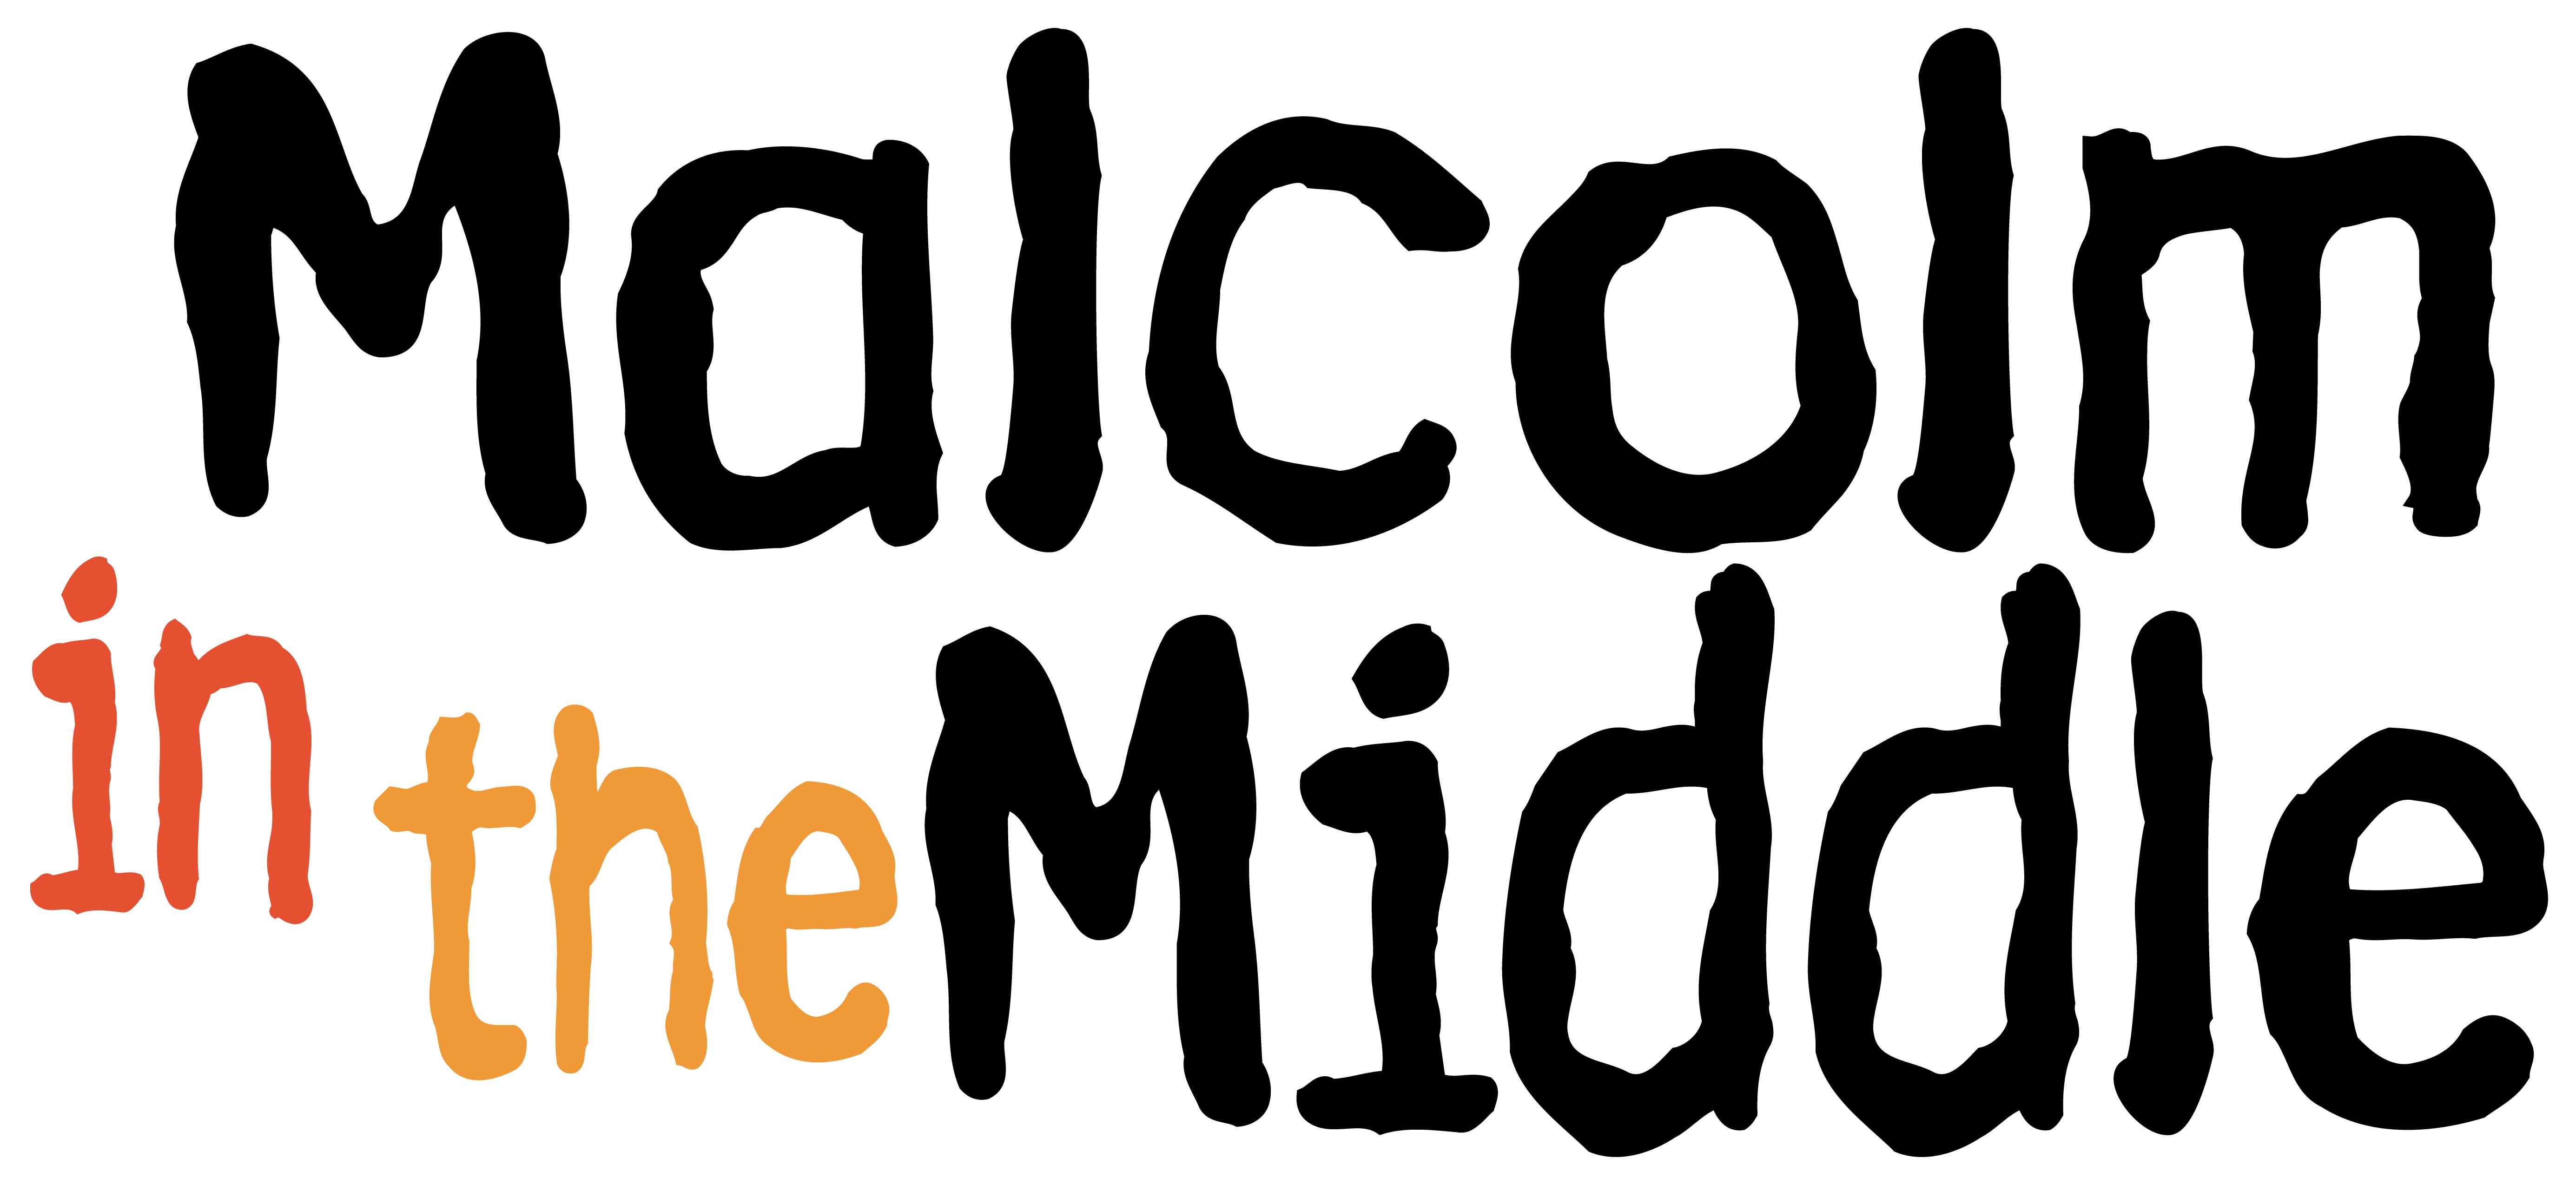 Official MITM series logos